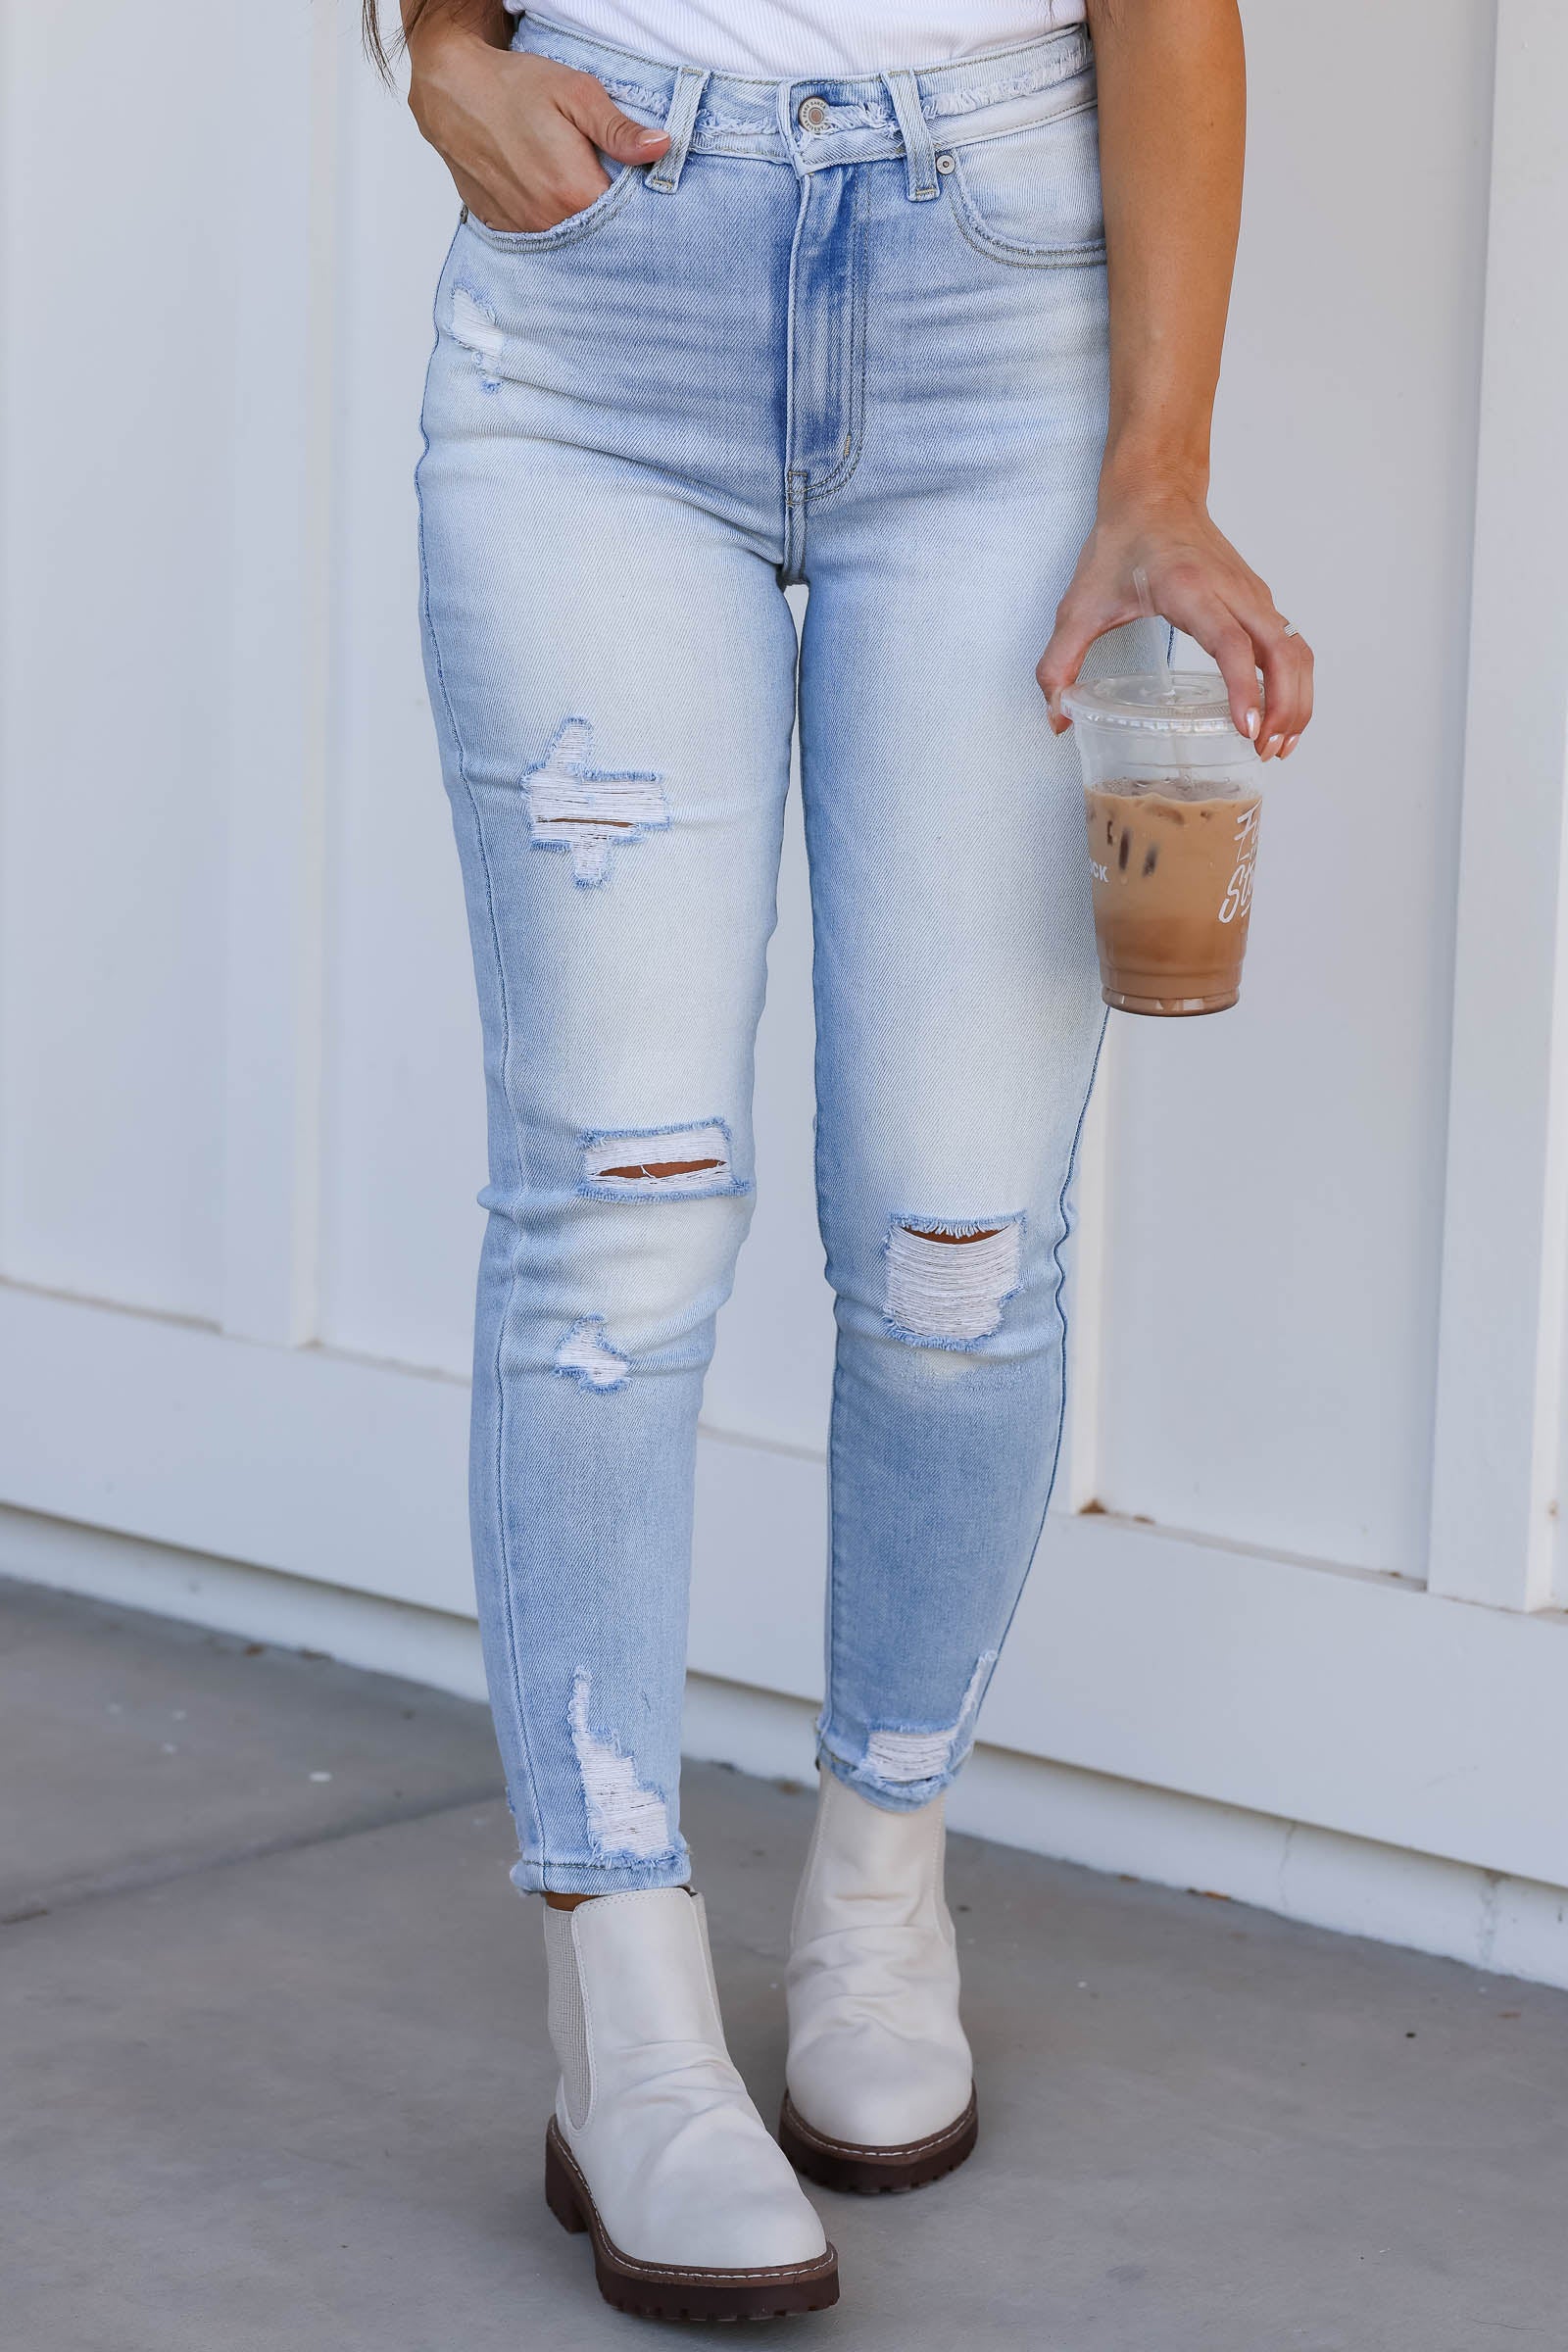 KANCAN Dakota High Rise Ankle Skinny Jeans - Light Wash, Closet Candy, 1